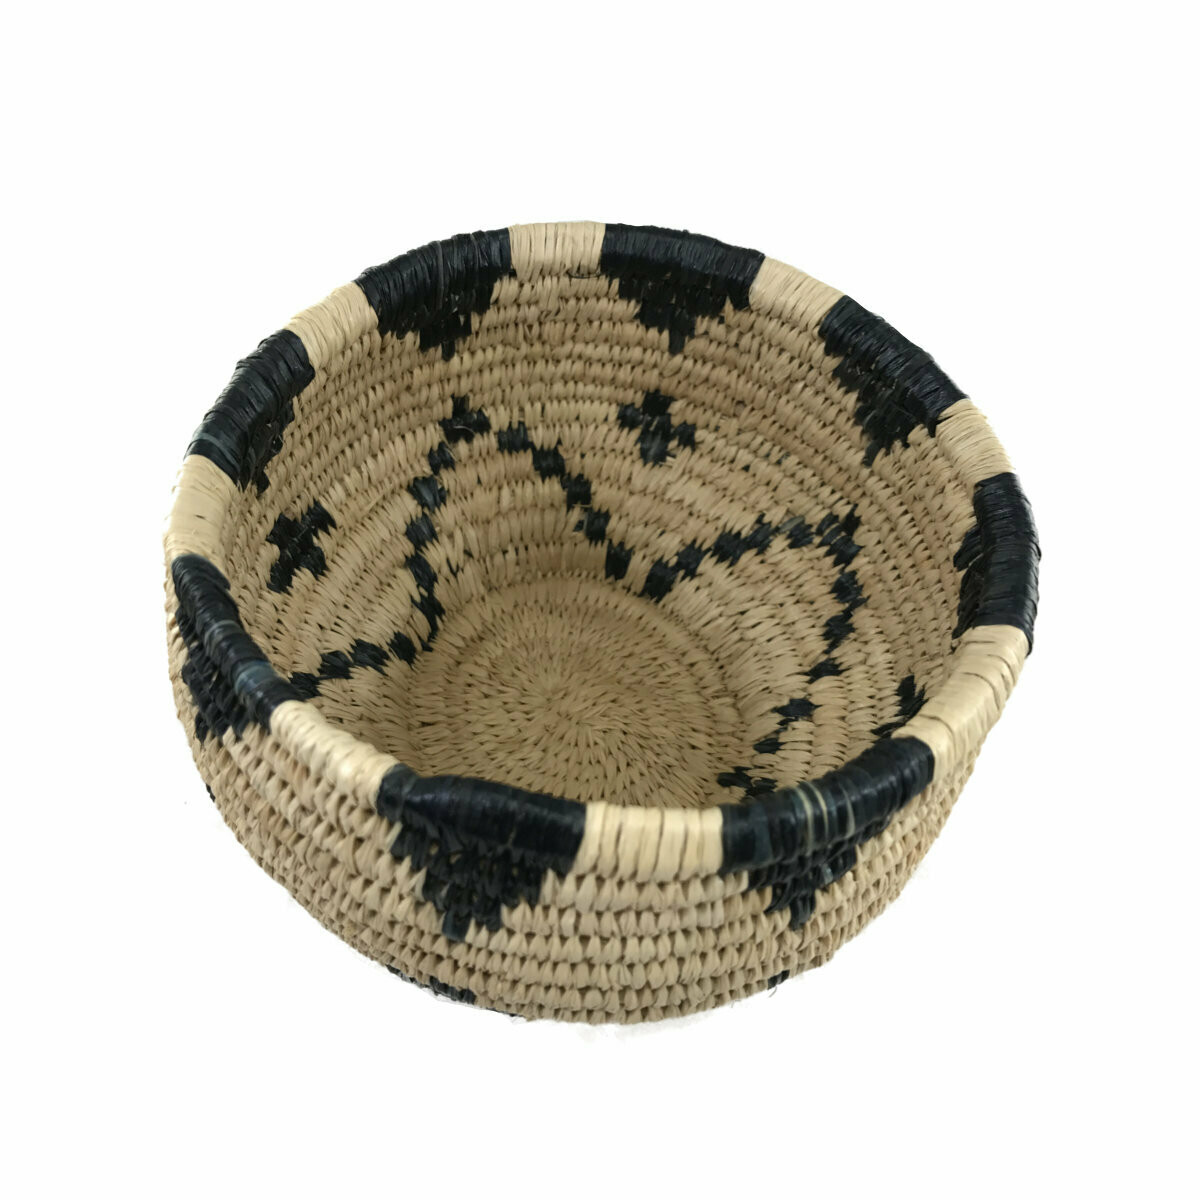 Coiled Basket Kit - Expanded Version